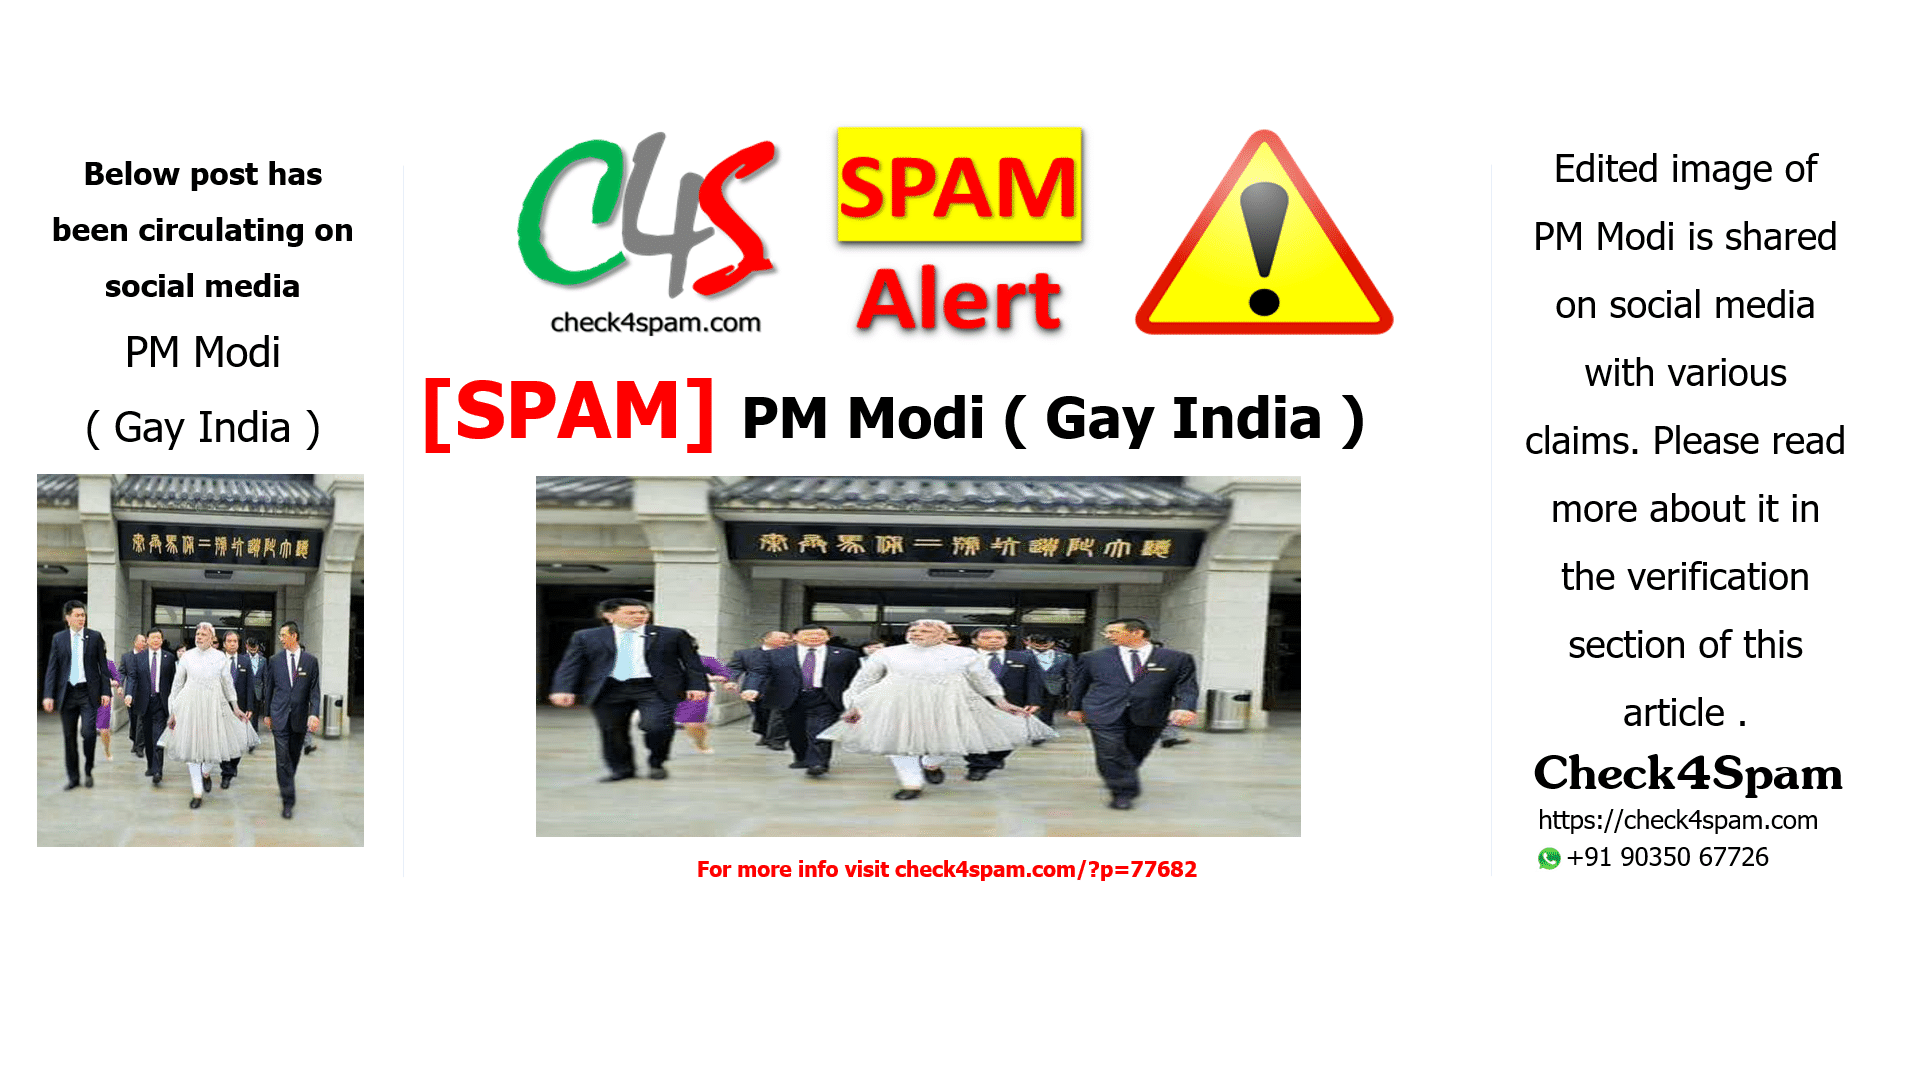 PM Modi ( Gay India )